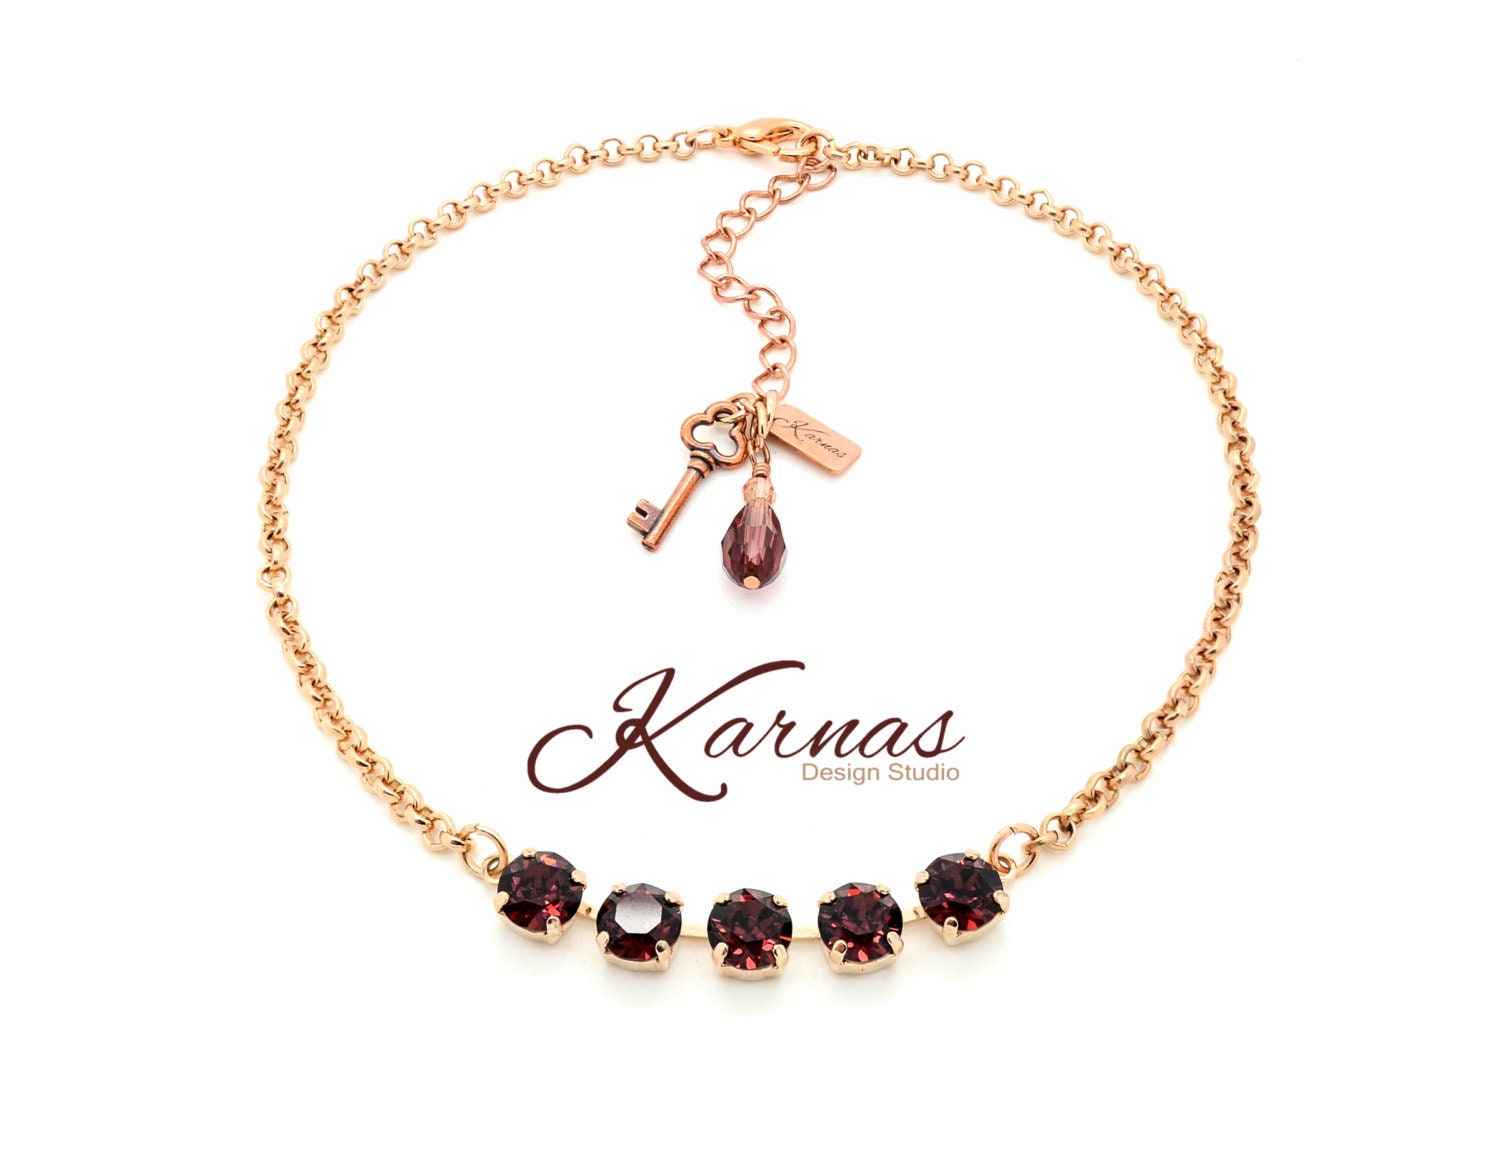 Burgundy 8mm Crystal Chaton Necklace K.d.s. Premium Pick Your Finish Karnas Design Studio Free Shipping